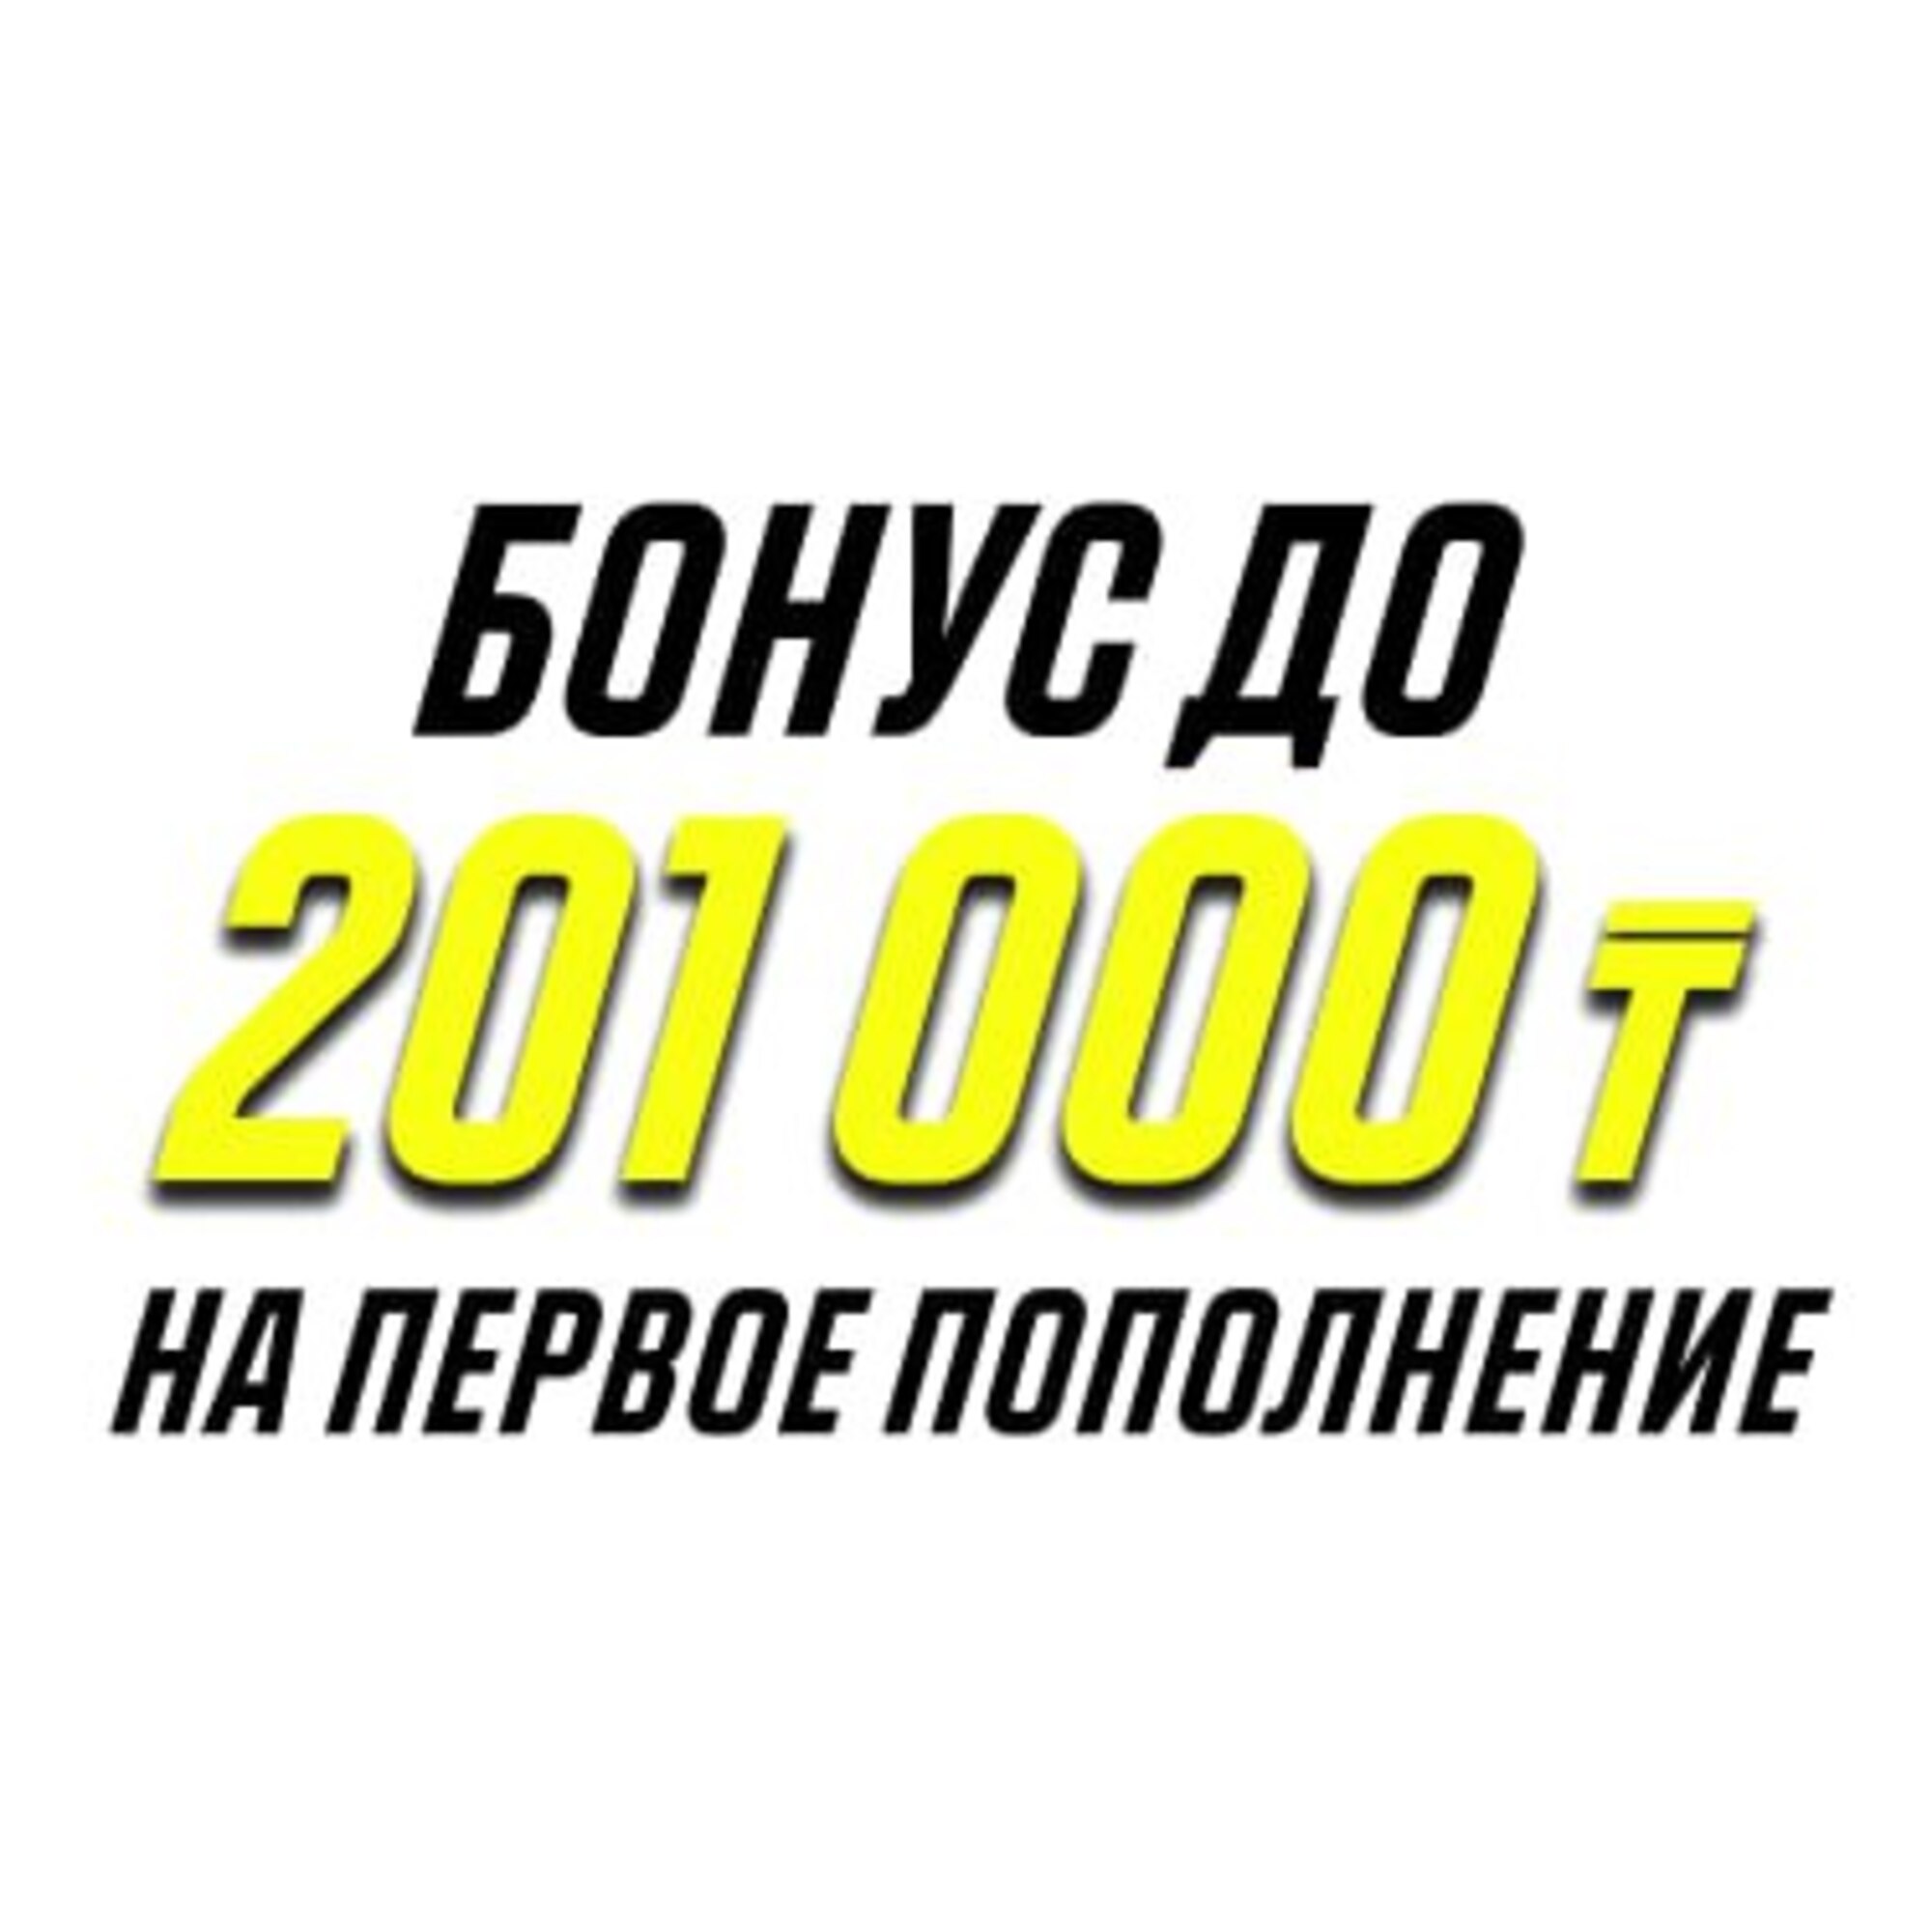 Бонус 201 000 тенге в Париматч КЗ